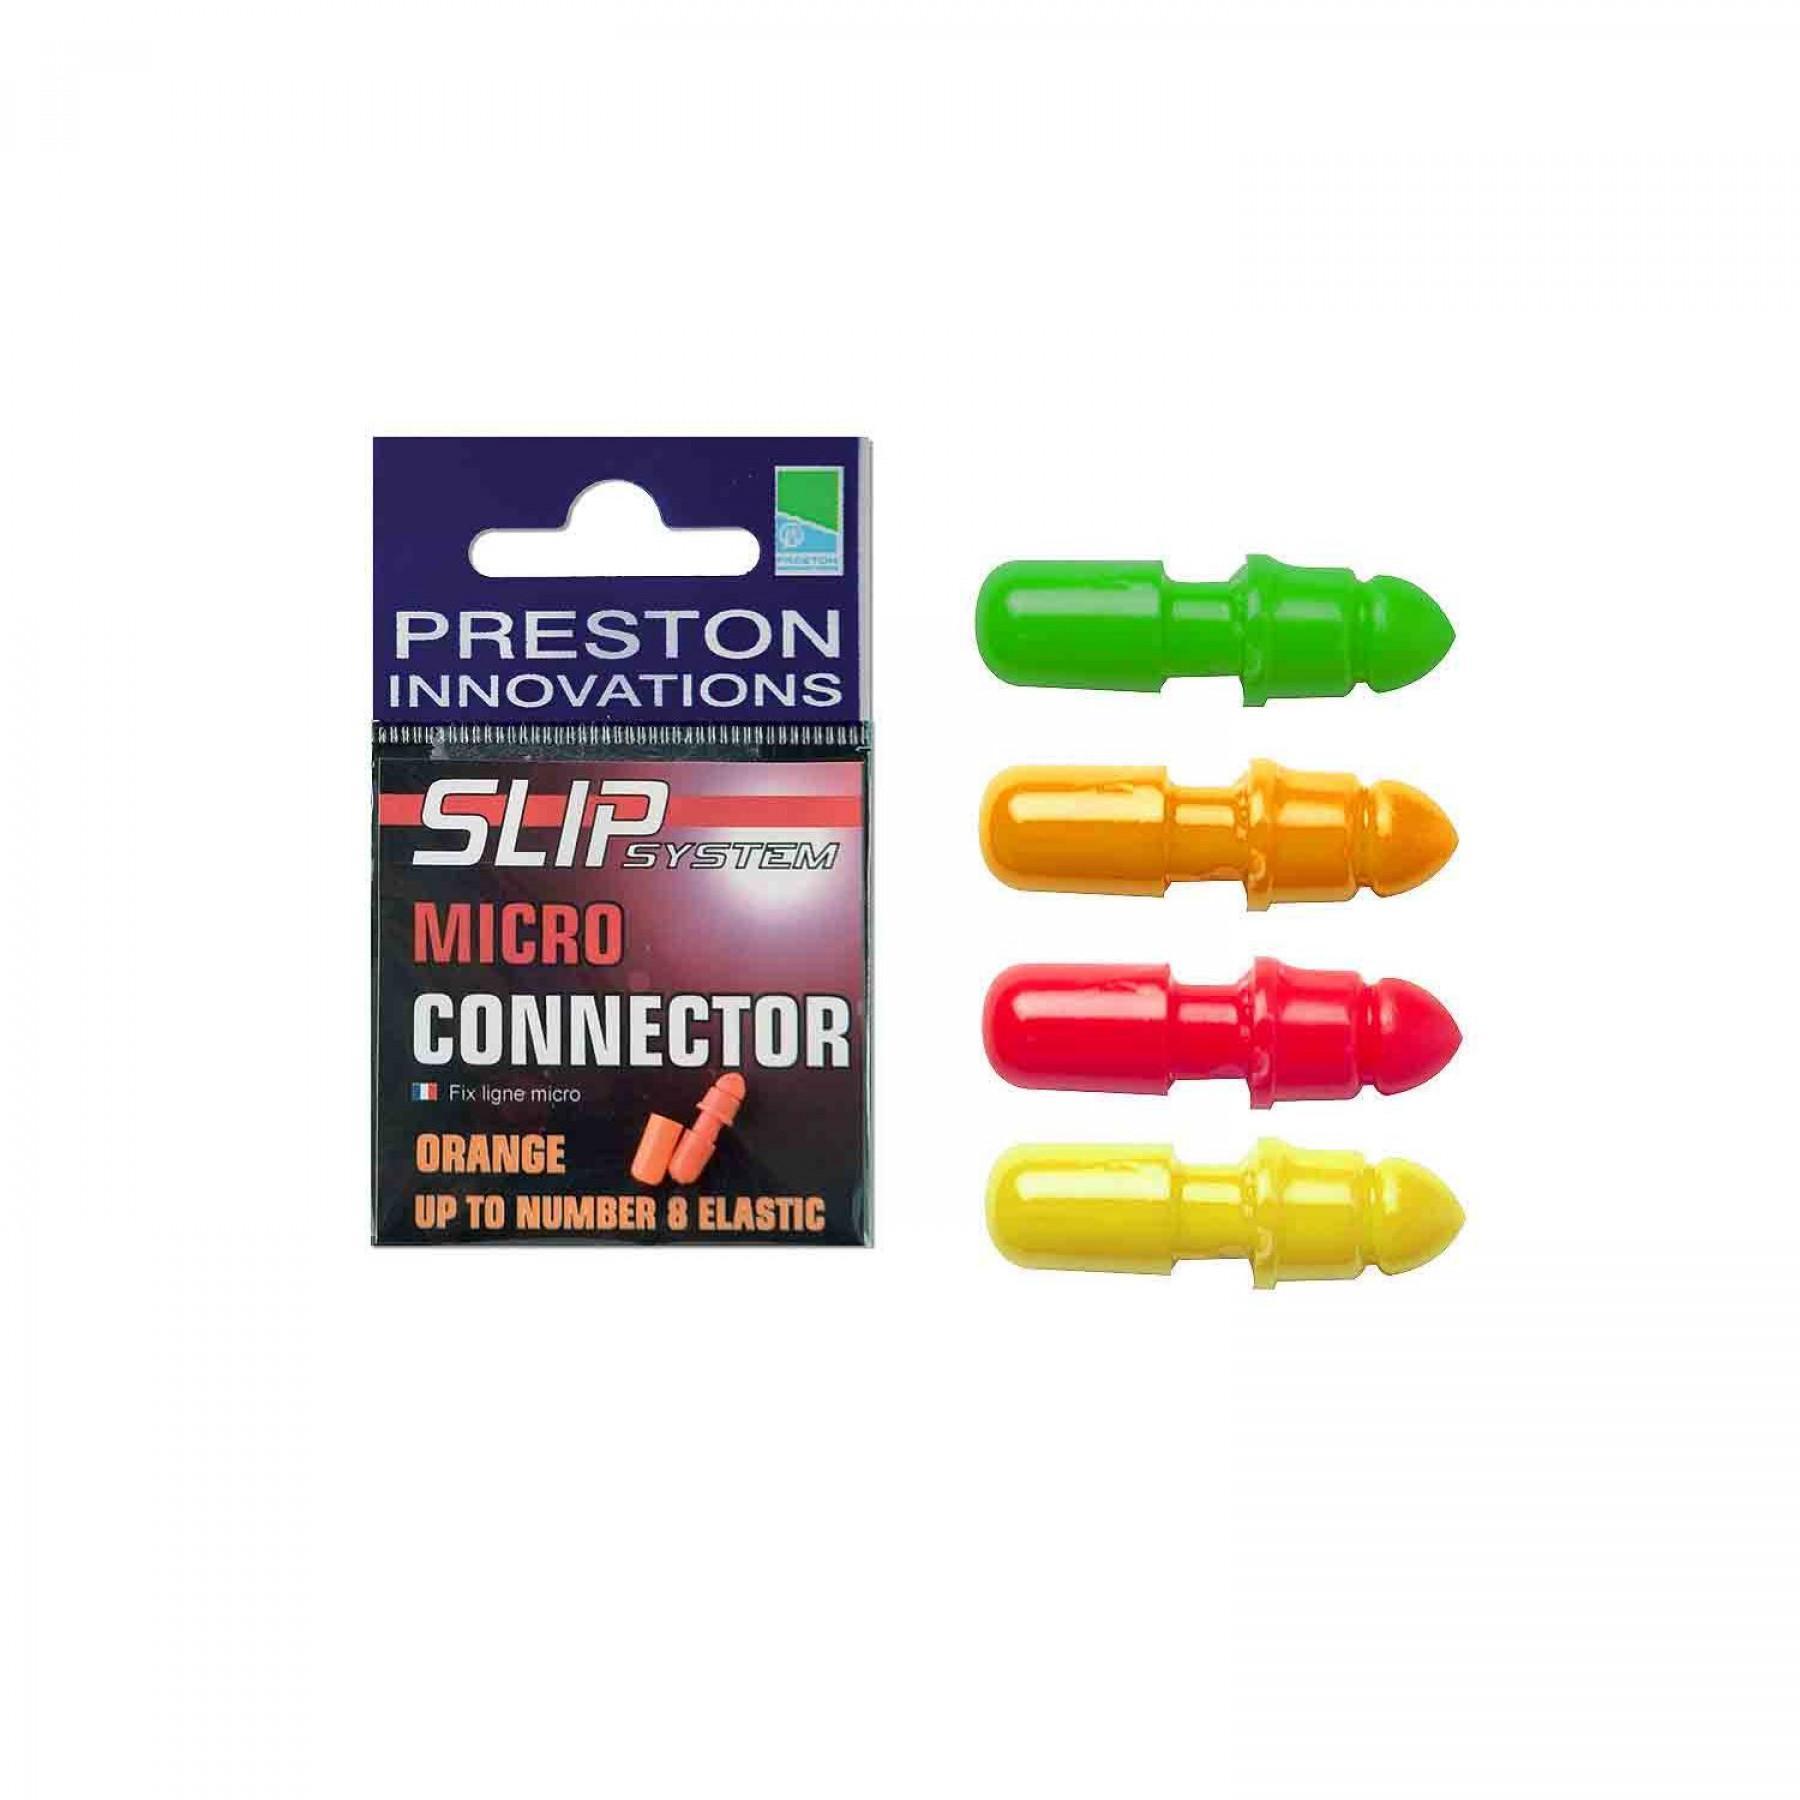 Steckverbinder Preston S/S Micro Flu Rouge